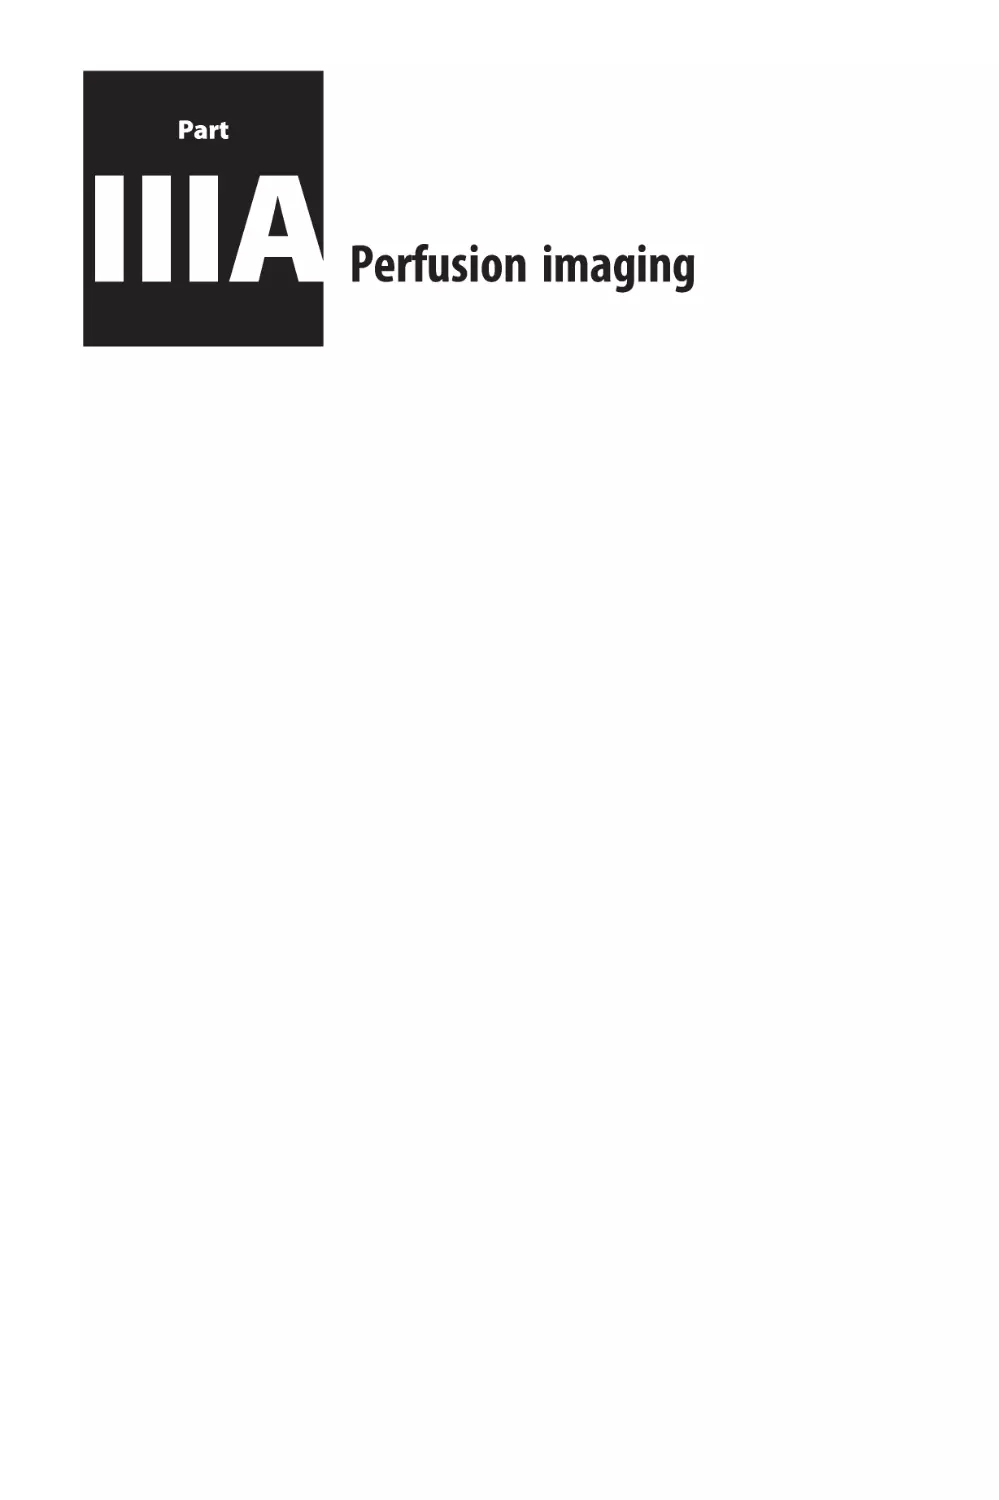 Part IIIA Perfusion imaging